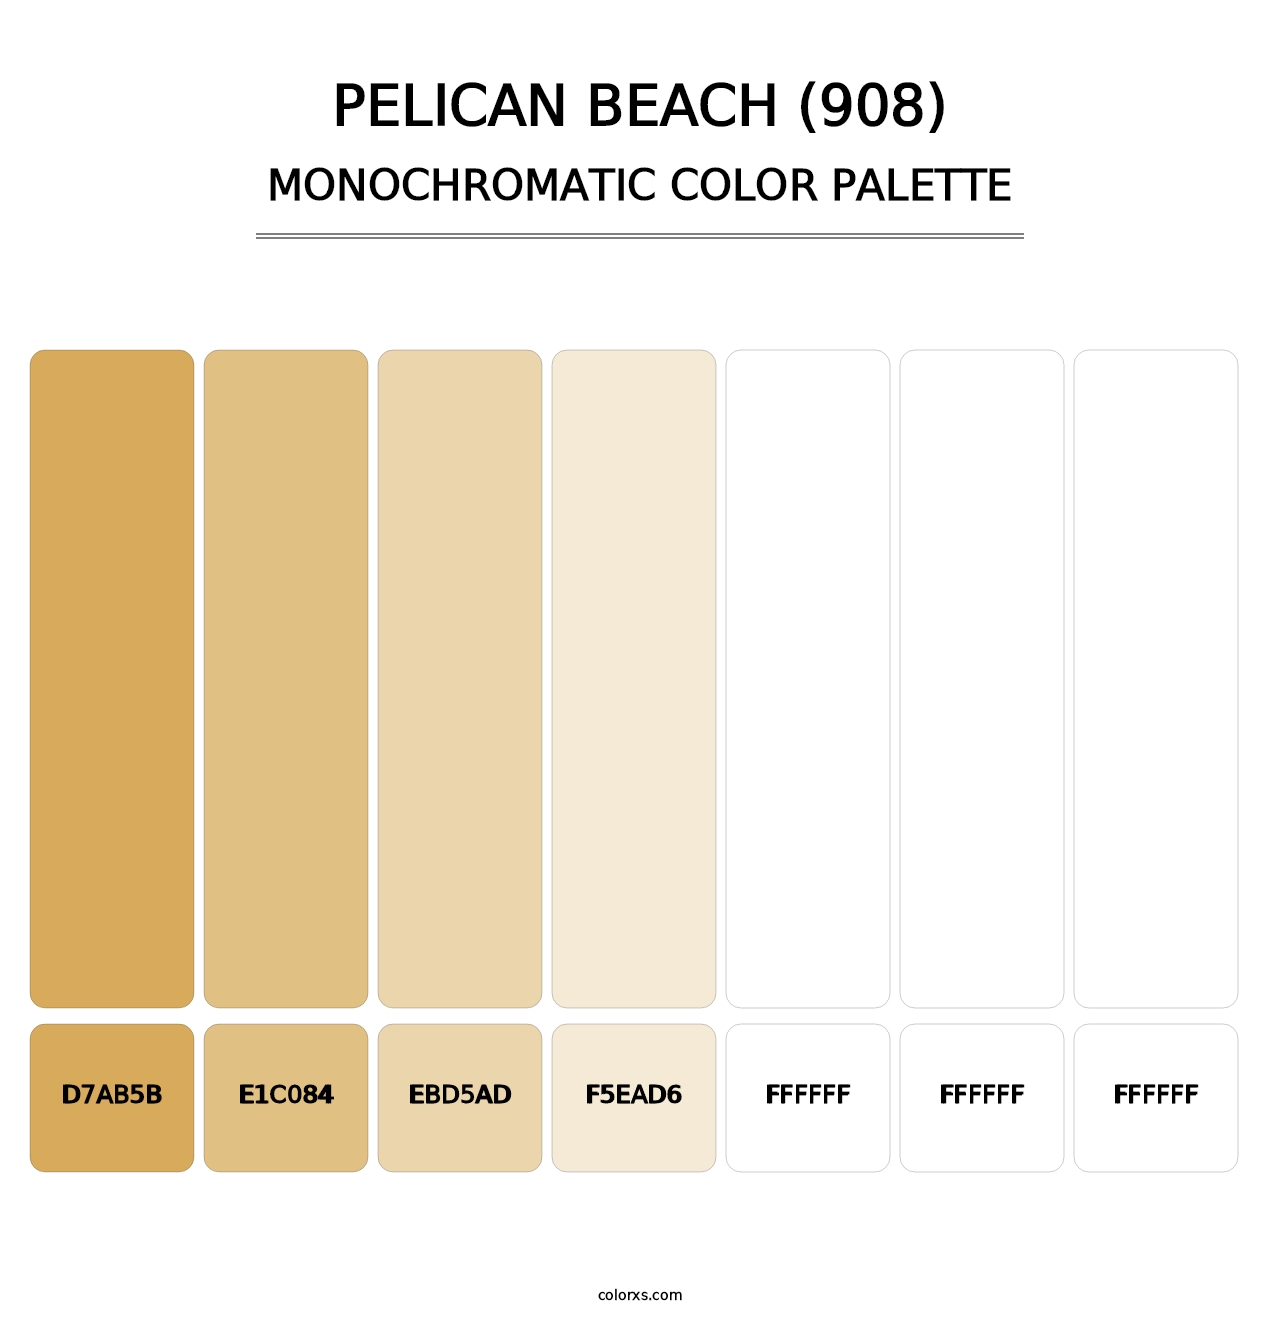 Pelican Beach (908) - Monochromatic Color Palette